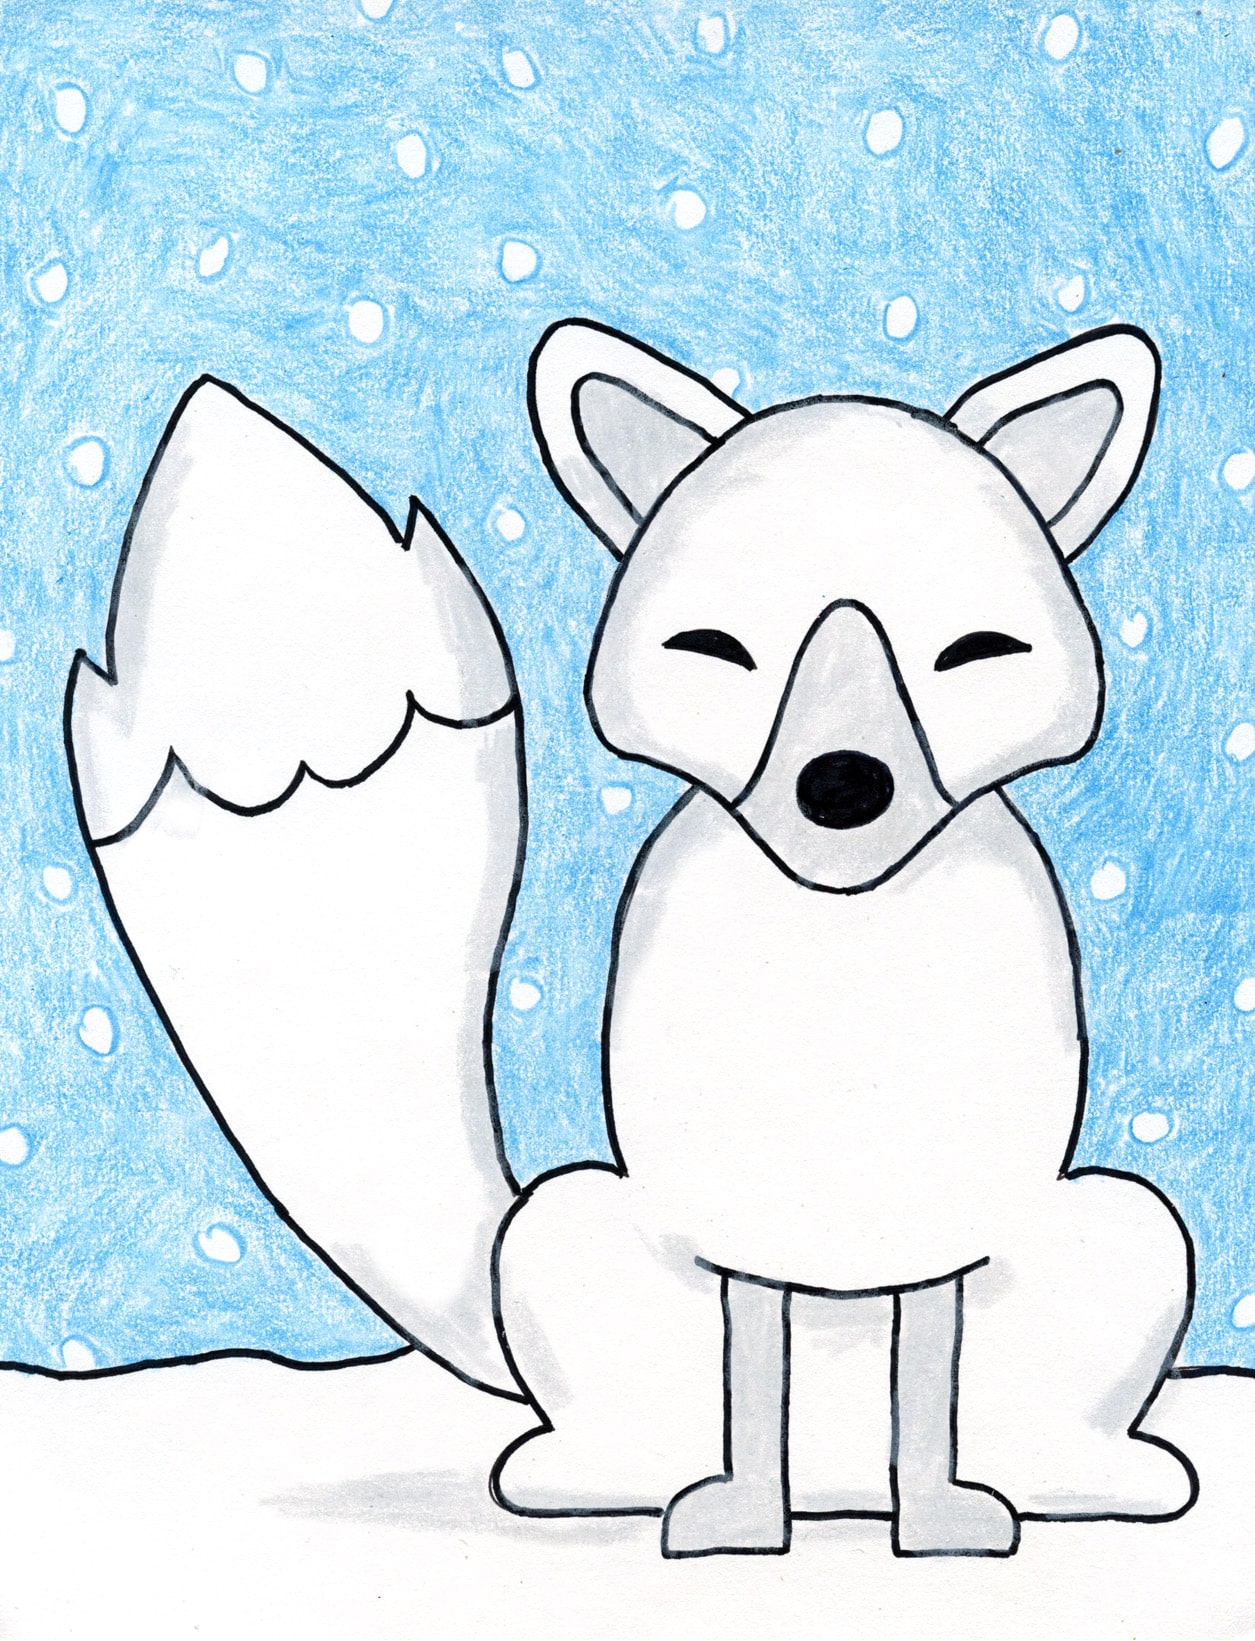 Draw an Arctic Fox web